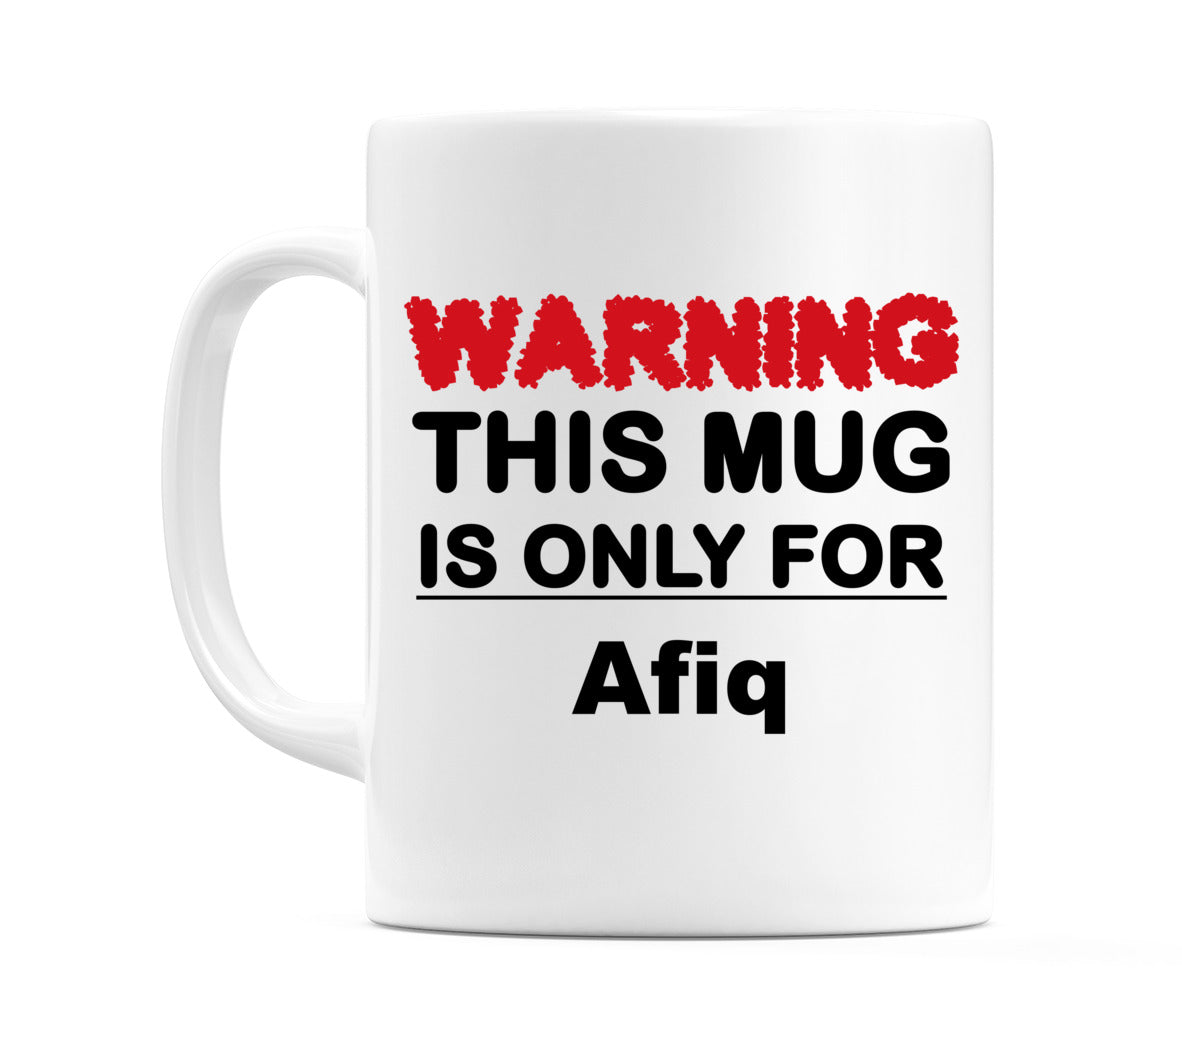 Warning This Mug is ONLY for Afiq Mug